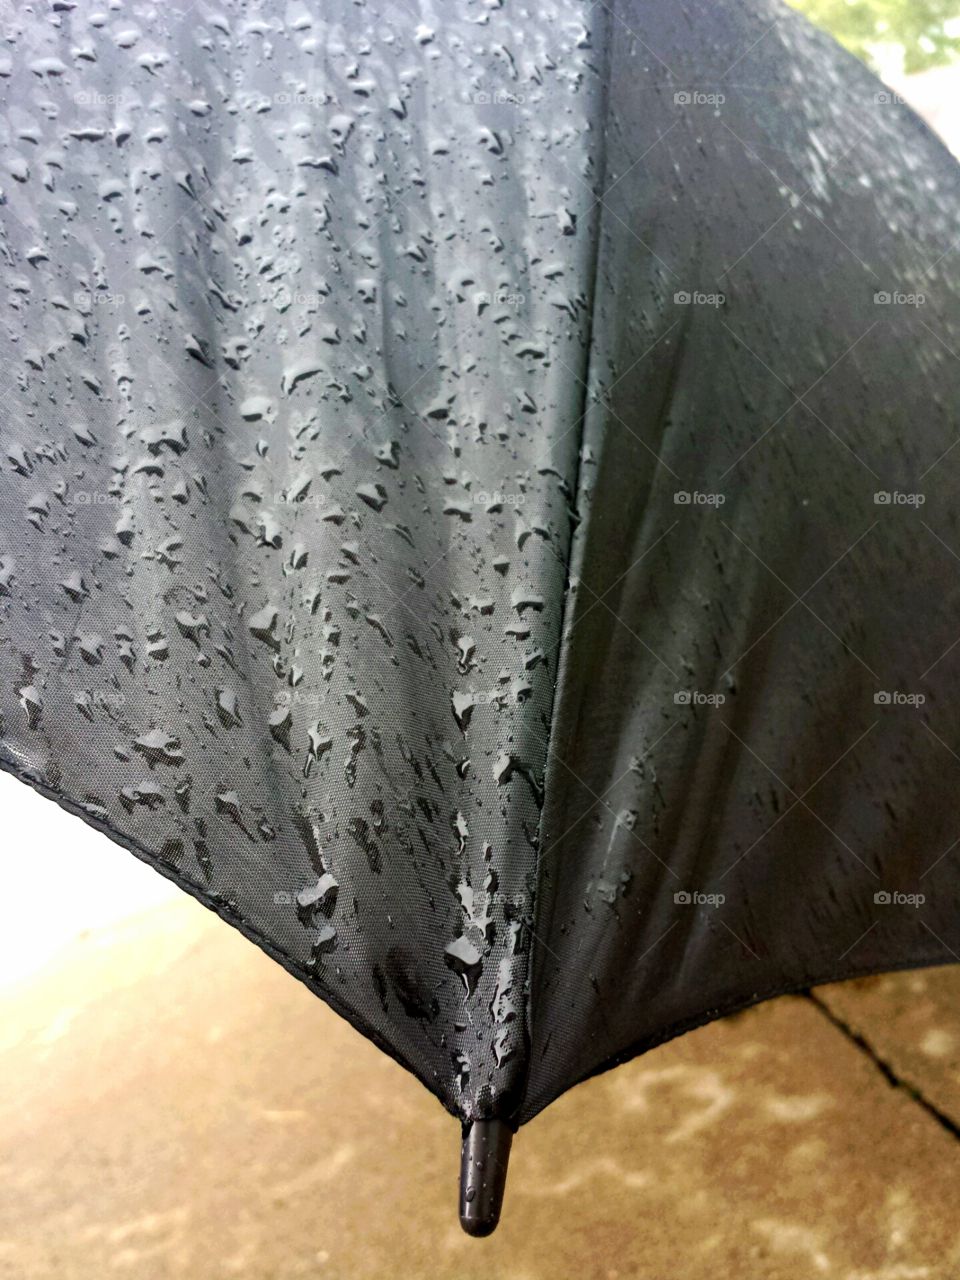 edge of the umbrella